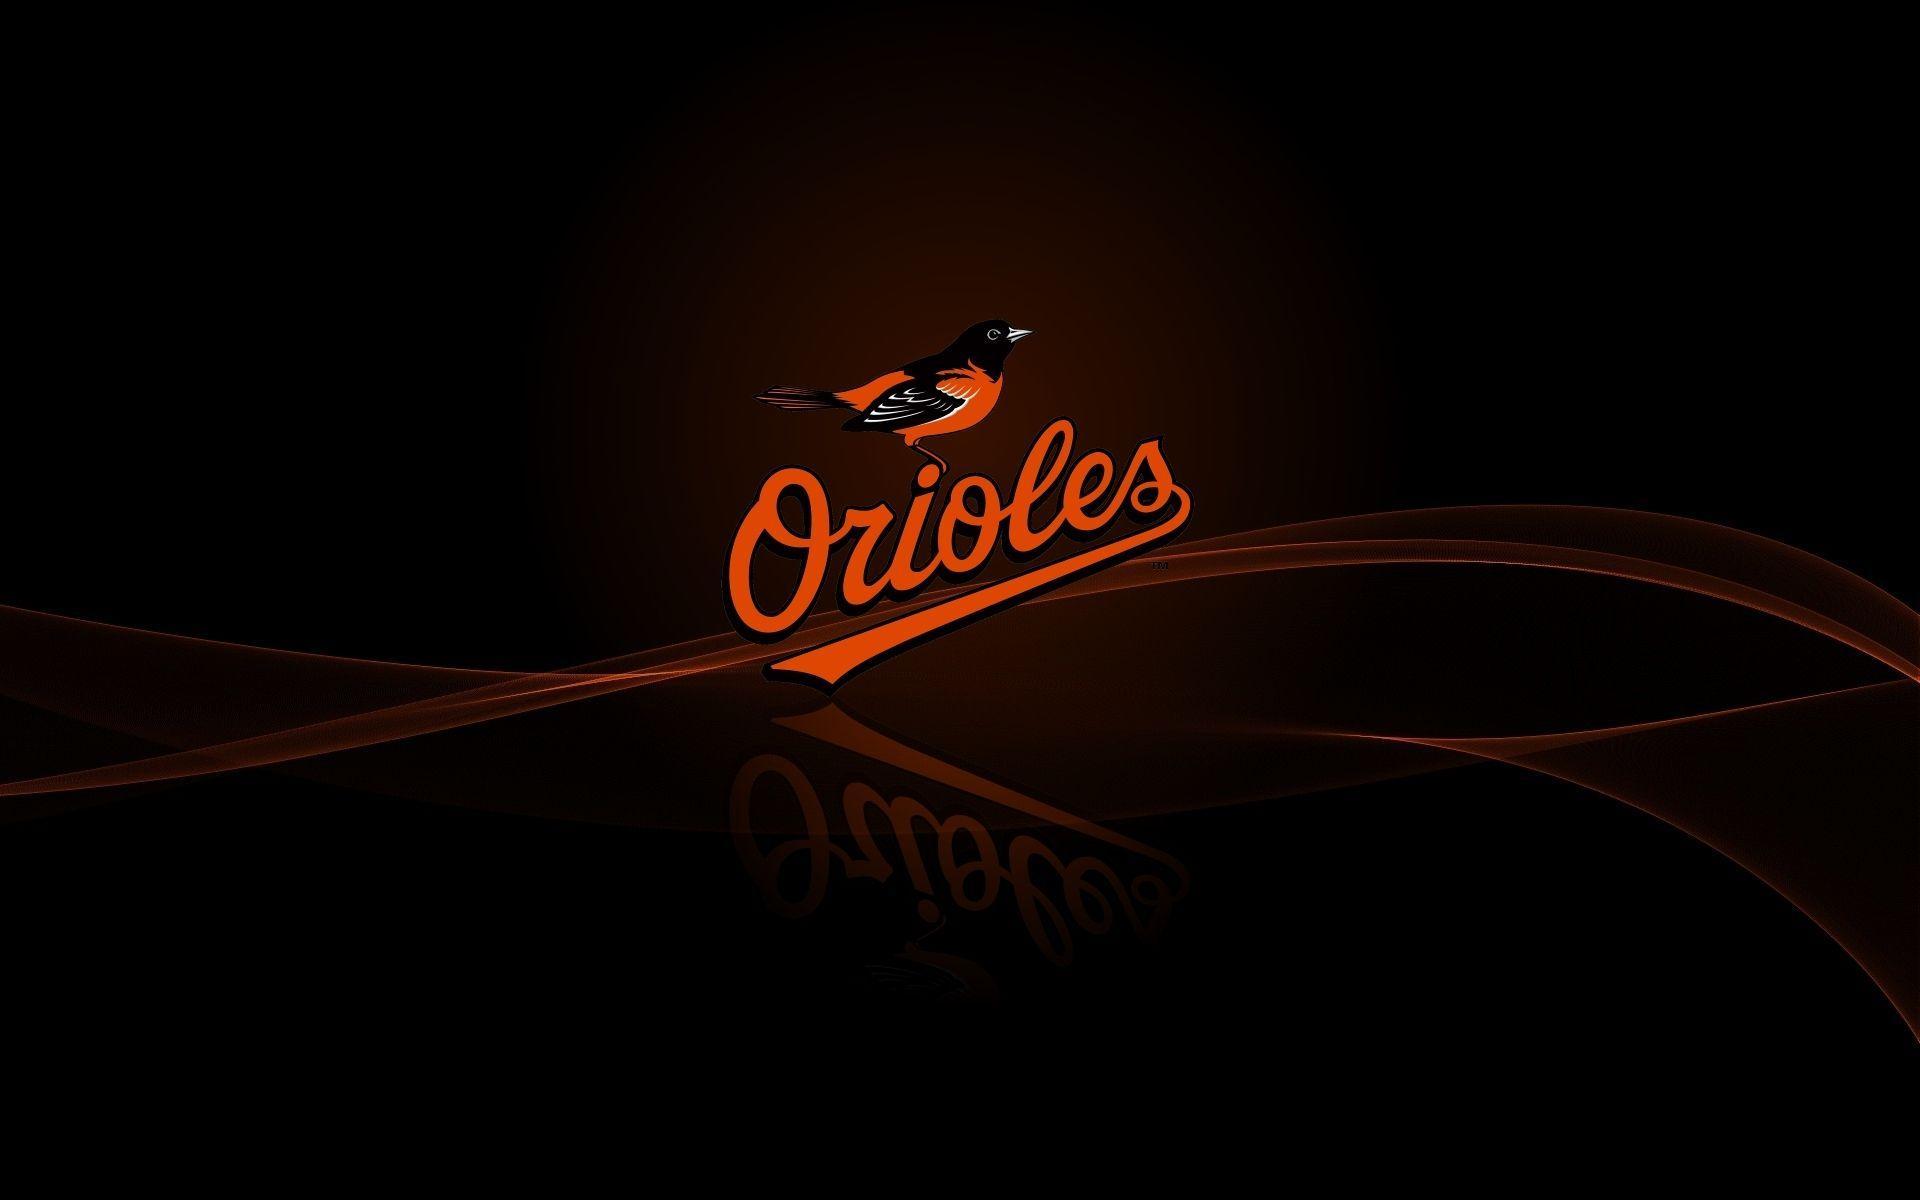 iPhone 6 Sports Wallpaper Thread  Baltimore orioles wallpaper, Orioles  wallpaper, Orioles baseball